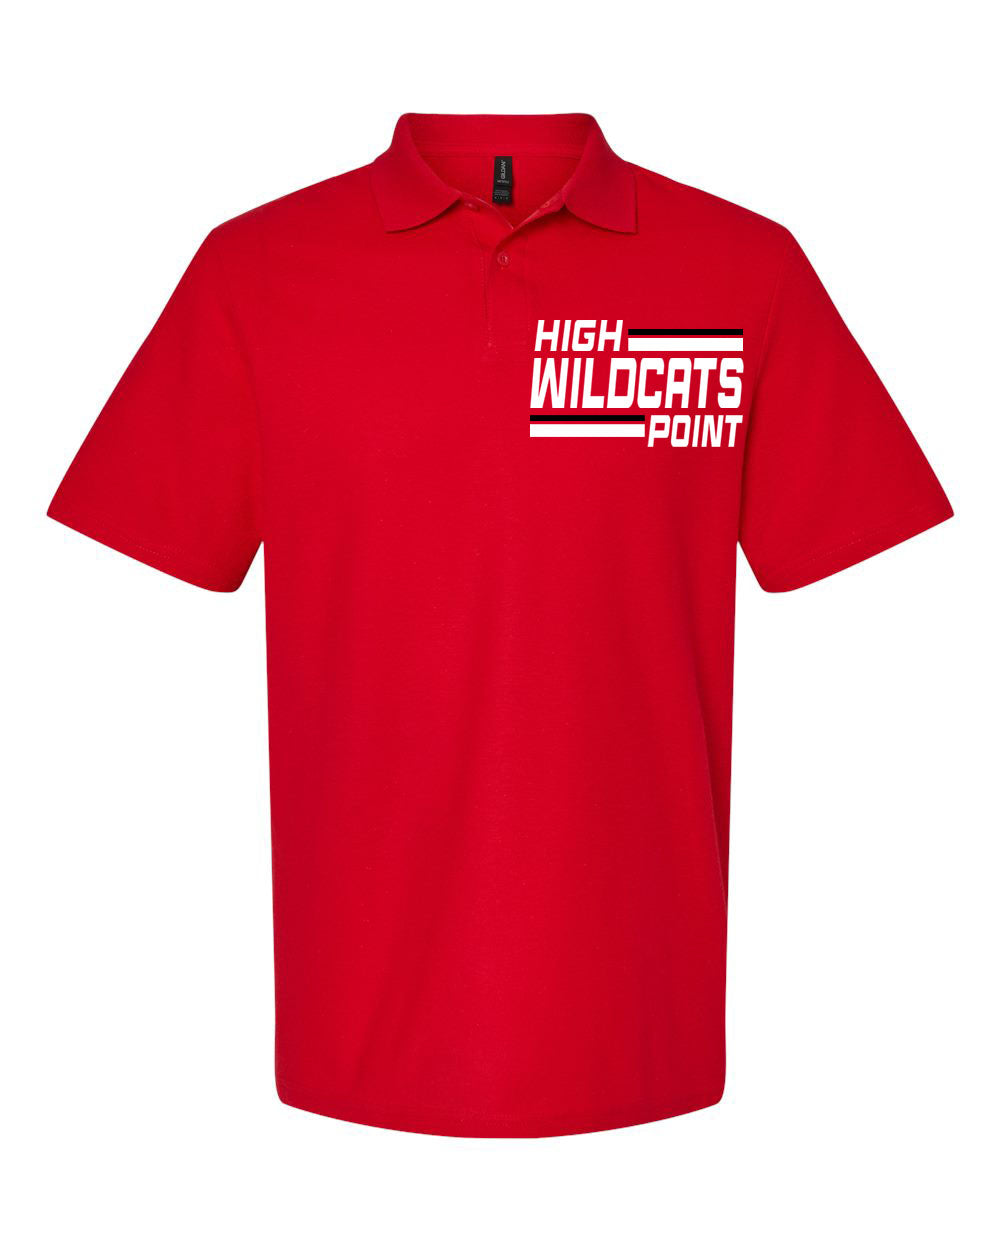 Wildcats Cheer Design 4 Polo T-Shirt